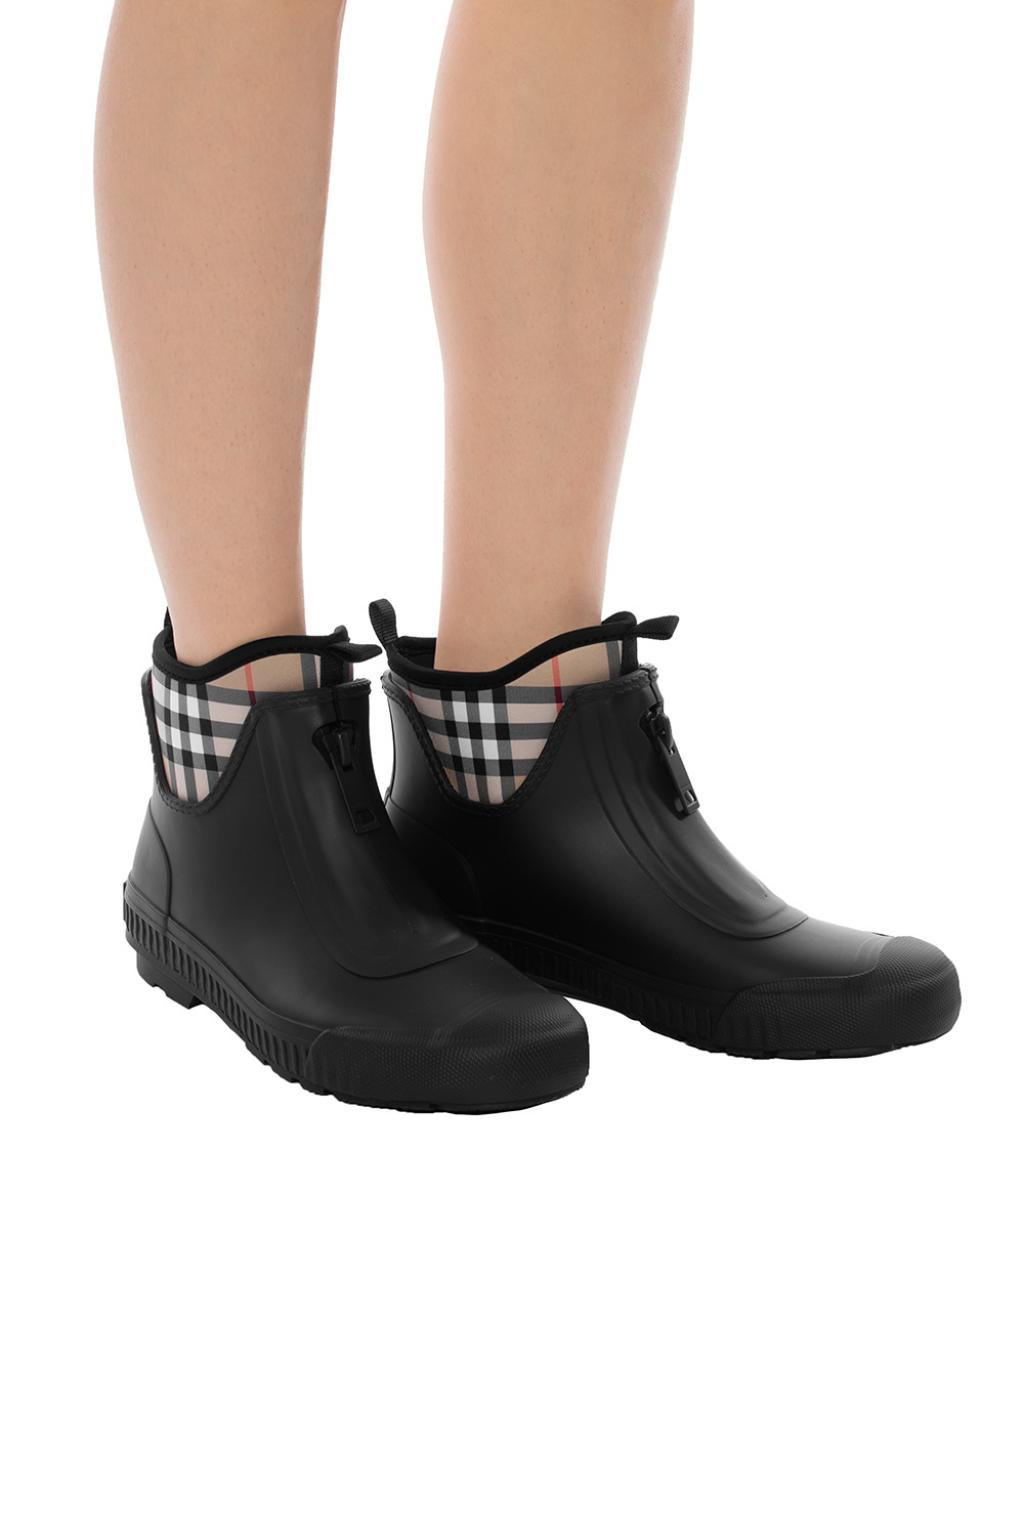 burberry short rain boots